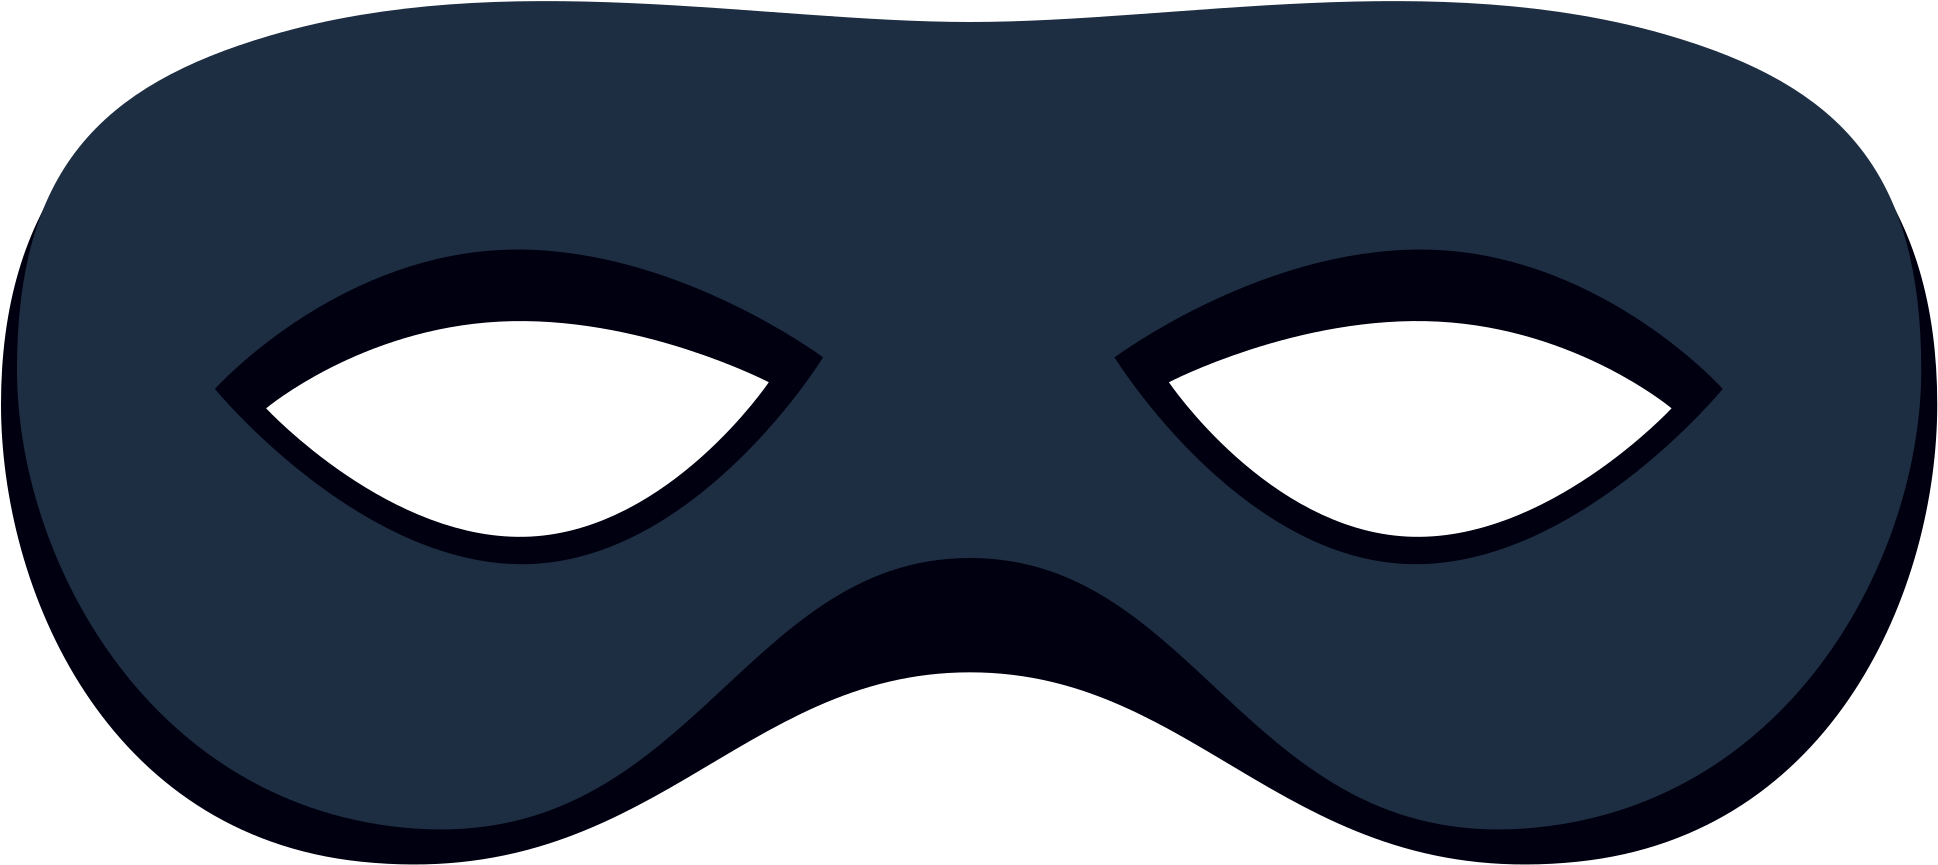 burglar mask png